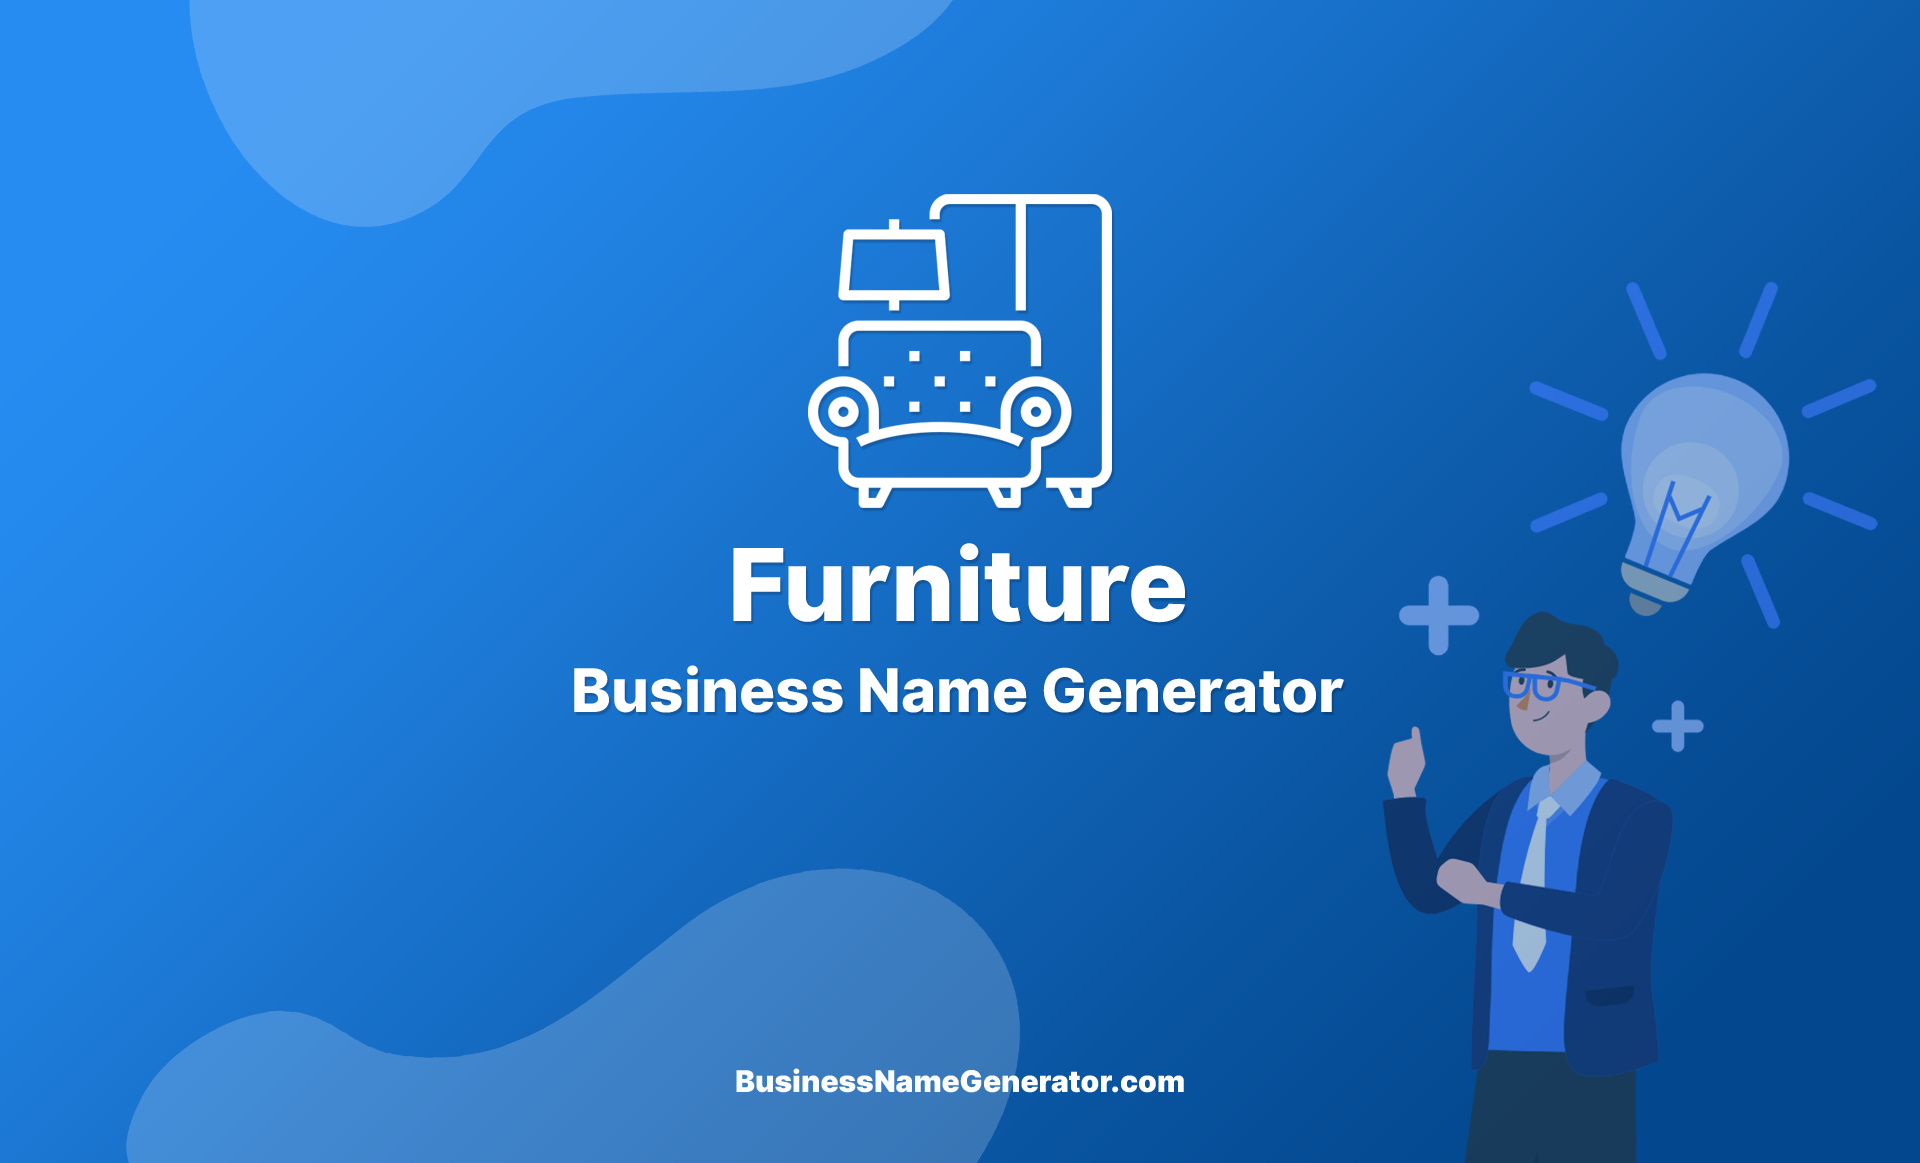 Furniture Business Name Generator Guide & Ideas